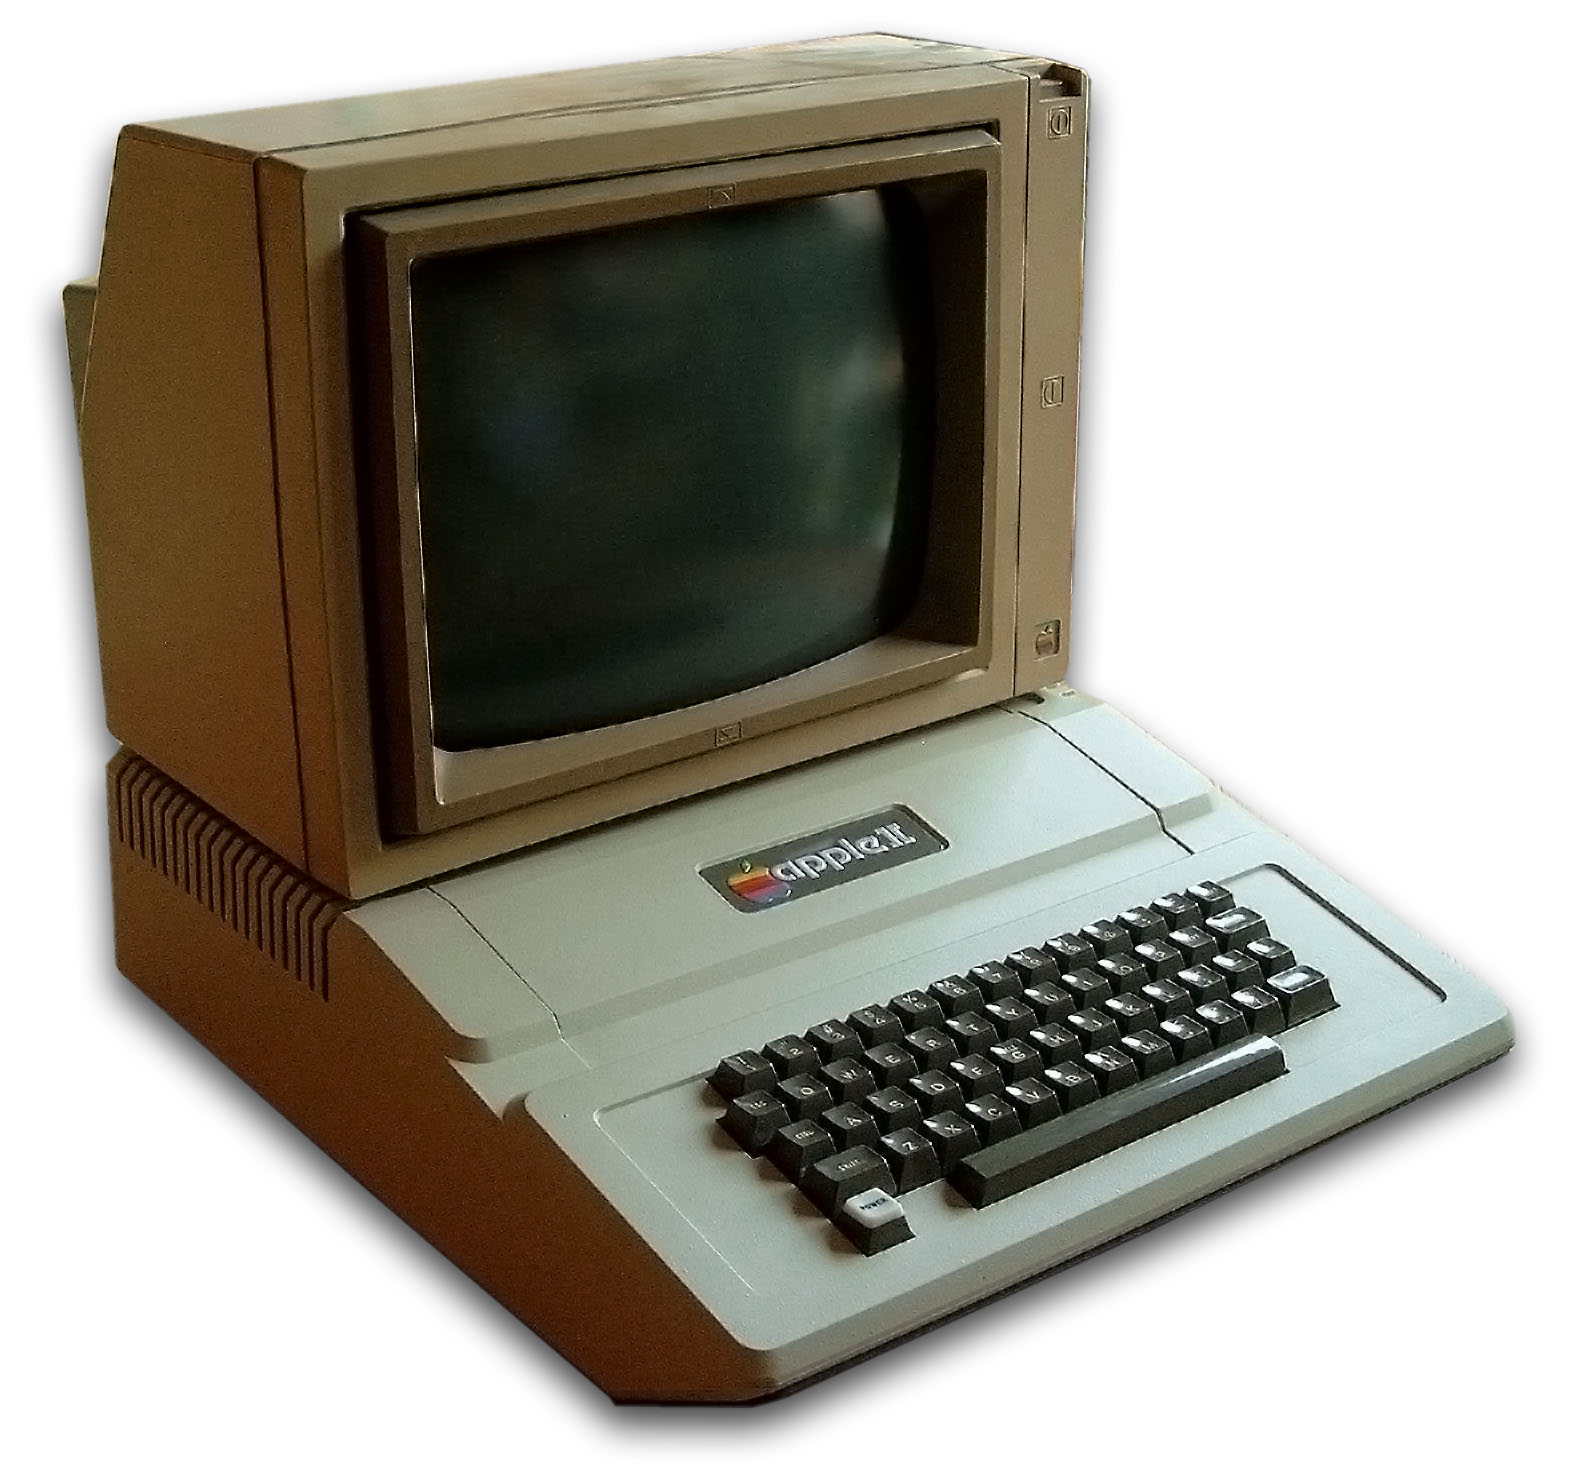 Компьютер страна производитель. Apple II TRS-80 Commodore Pet. Эппл 2 компьютер. Apple II 1977. ЭВМ «Commodore Vic-20».